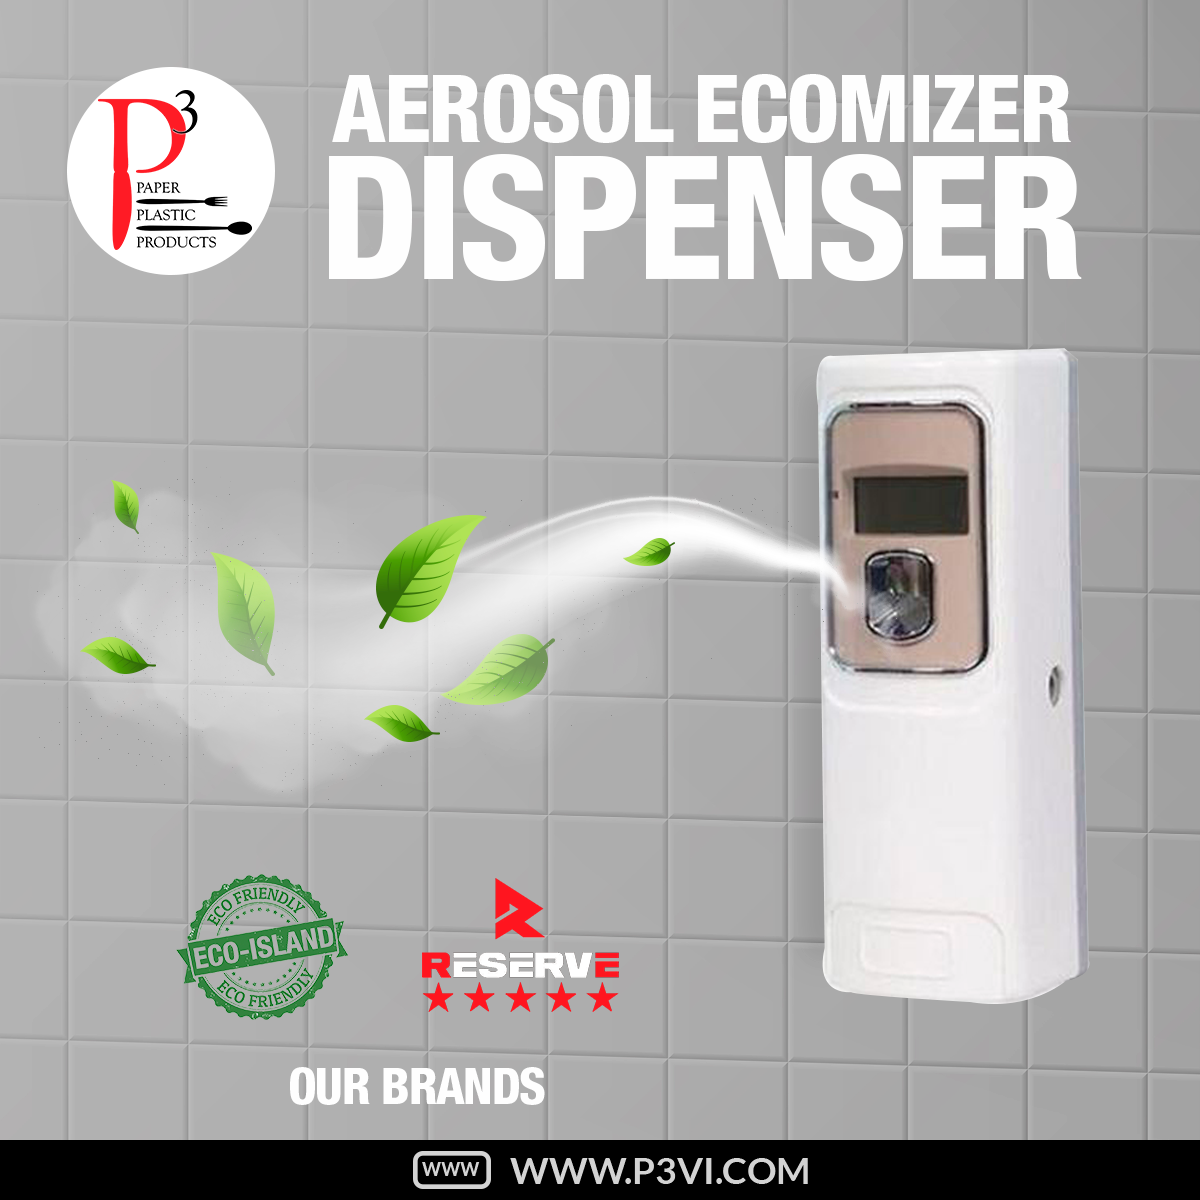 Dispenser Aerosol Ecomizer 1/1